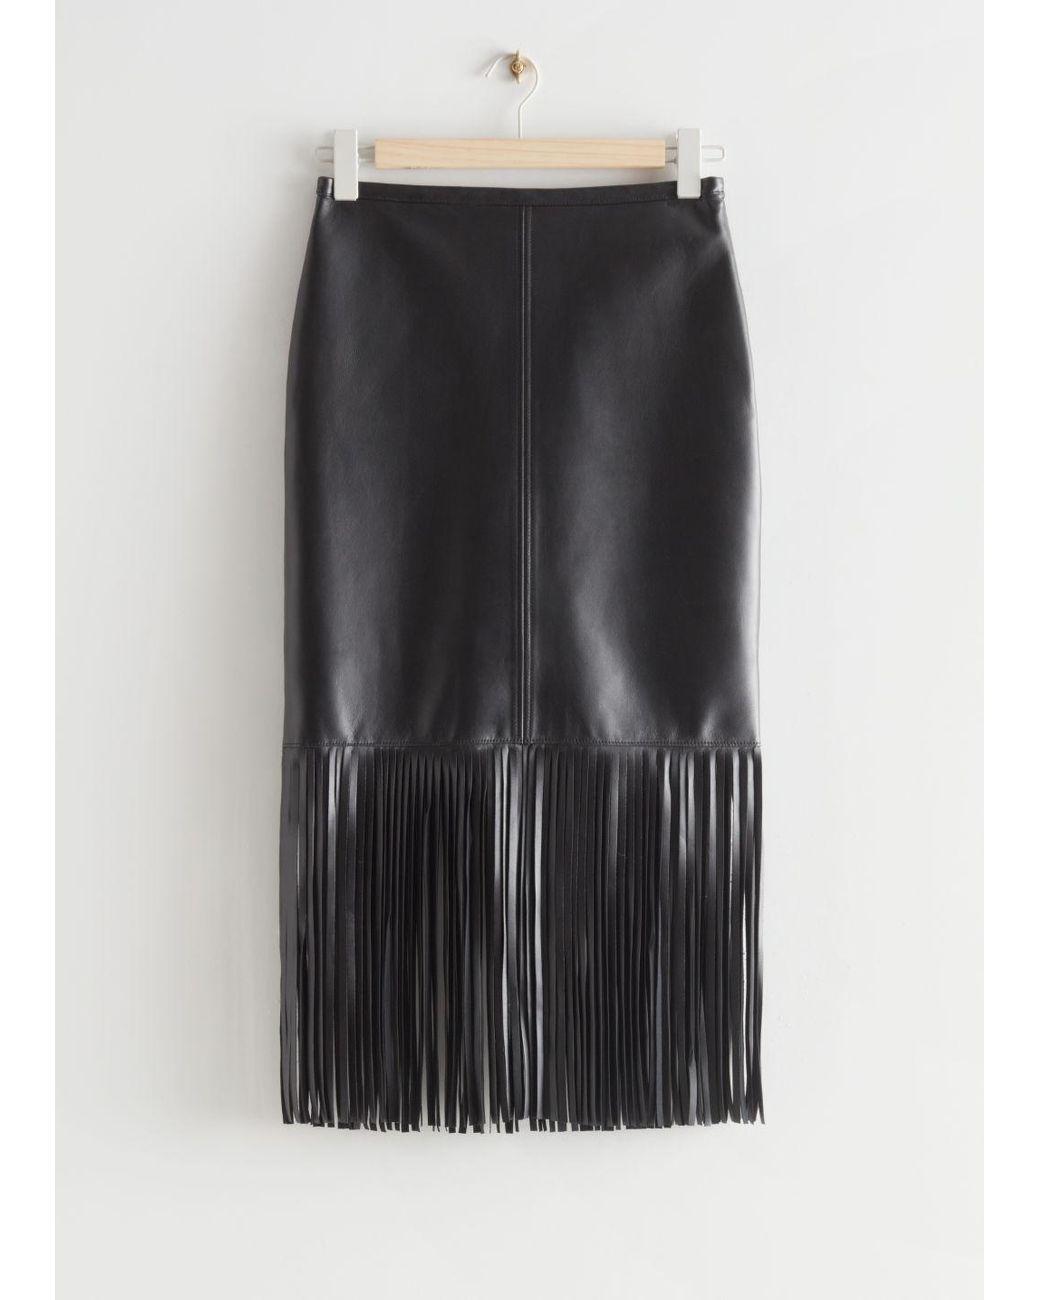 BAGATELLE.NYC Fringed Faux Leather Midi Skirt